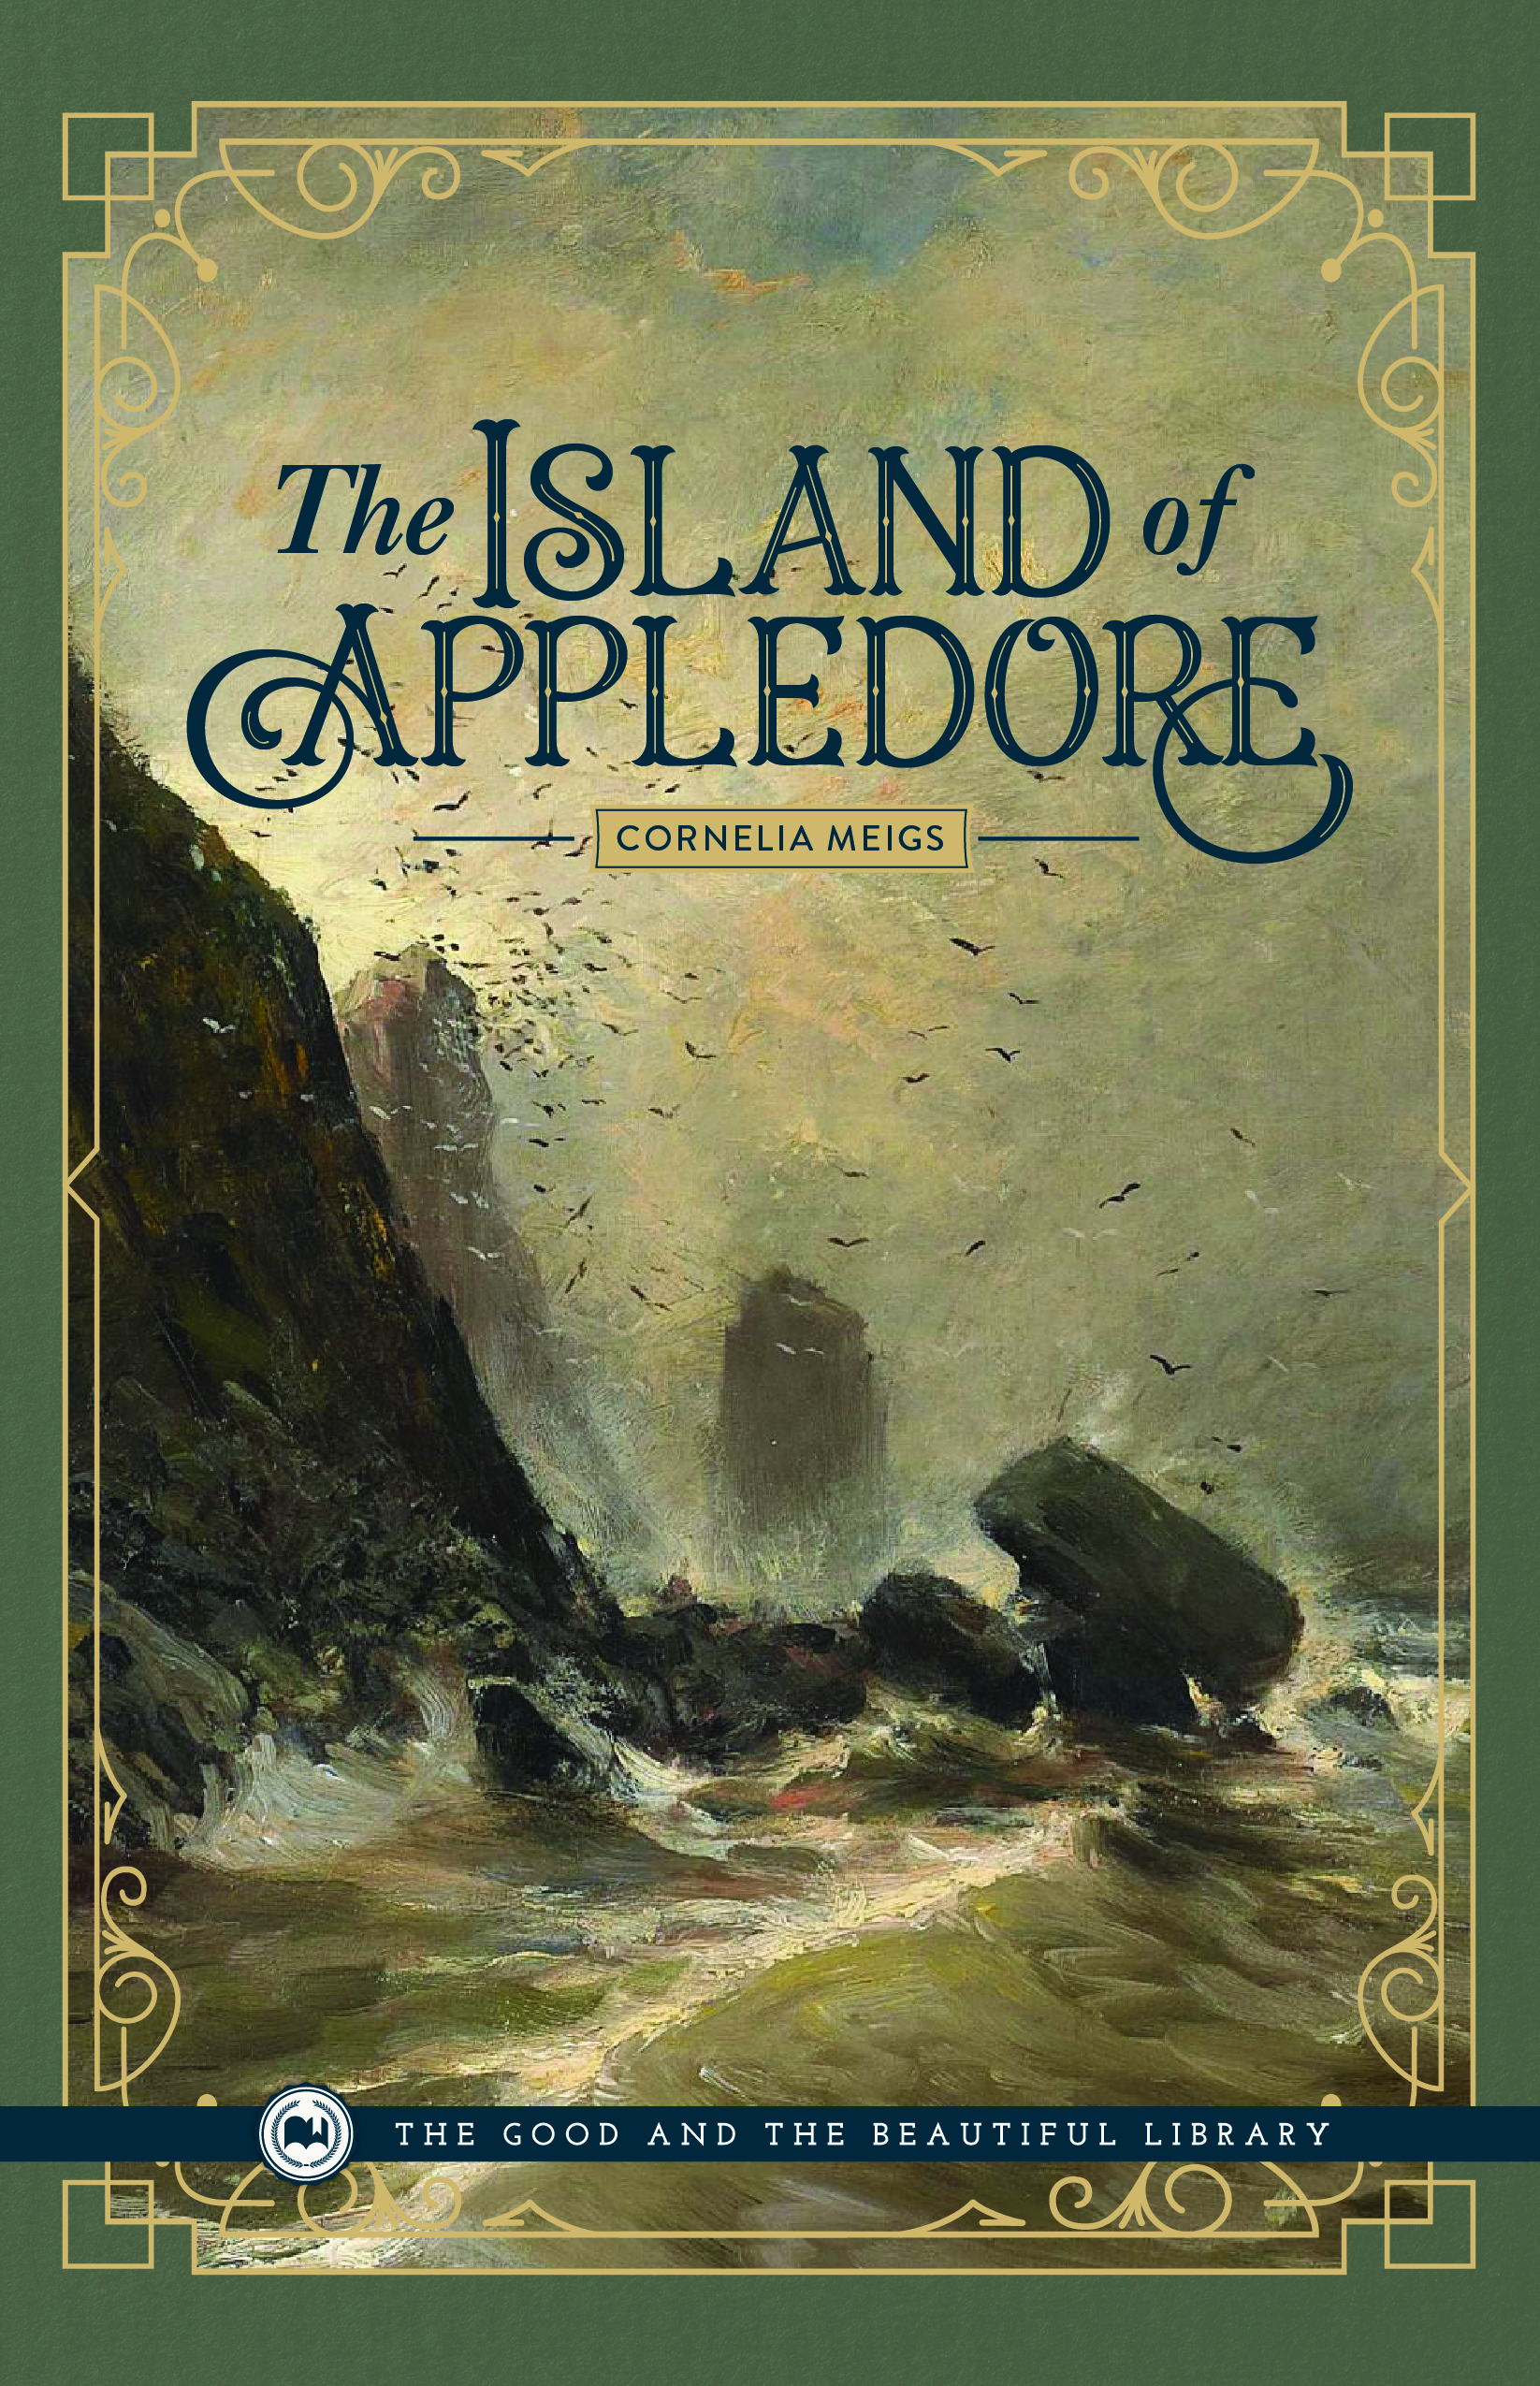 The Island of Appledore